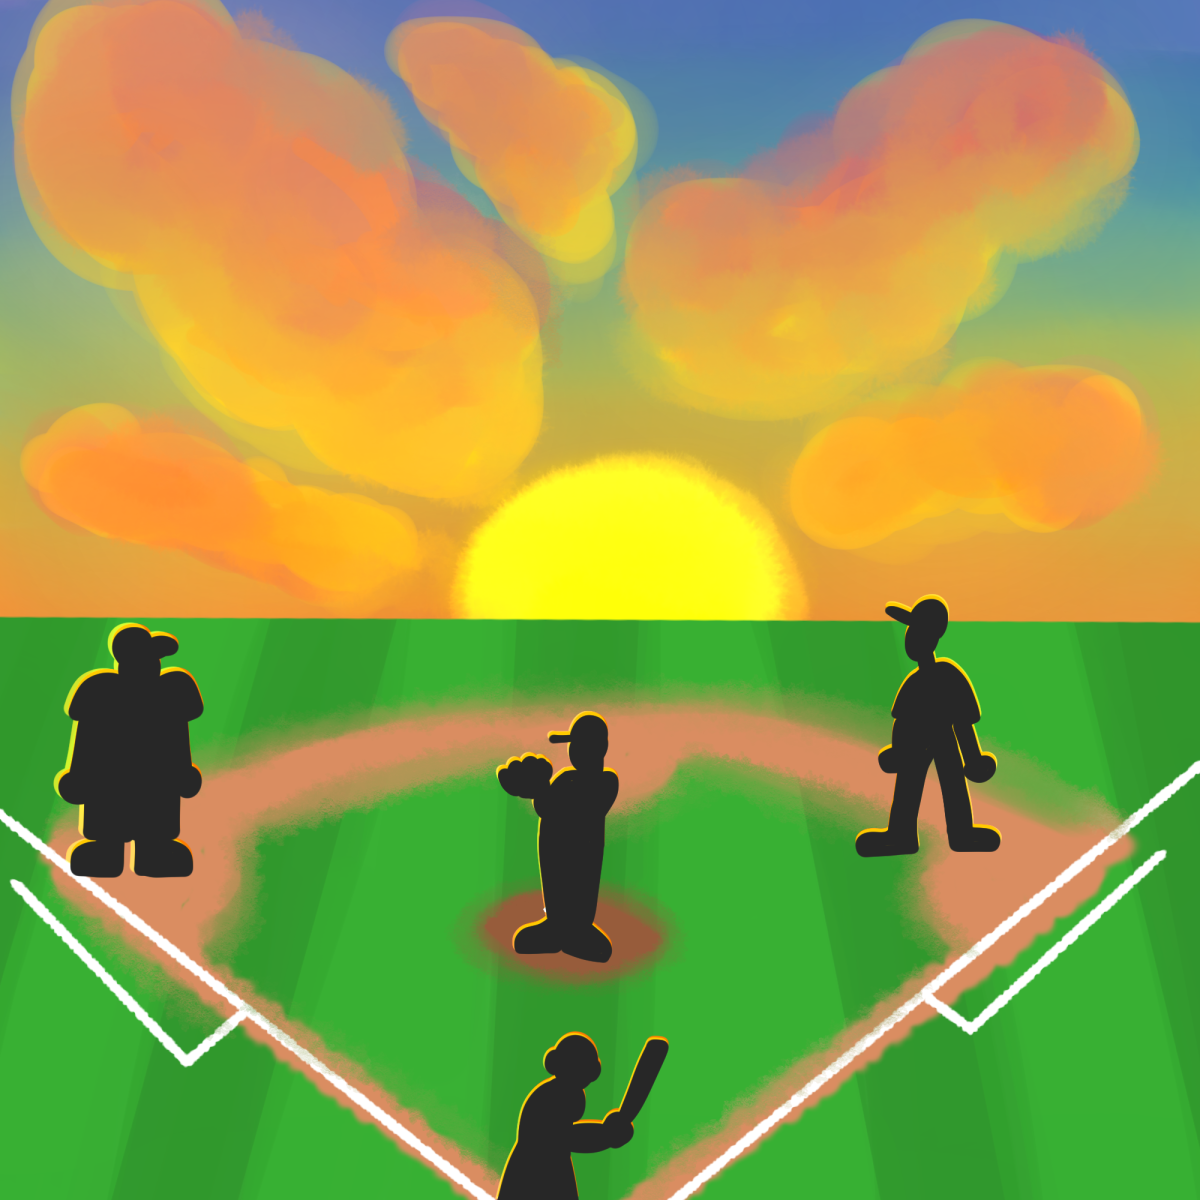 Sunrise over a baseball field, color edition